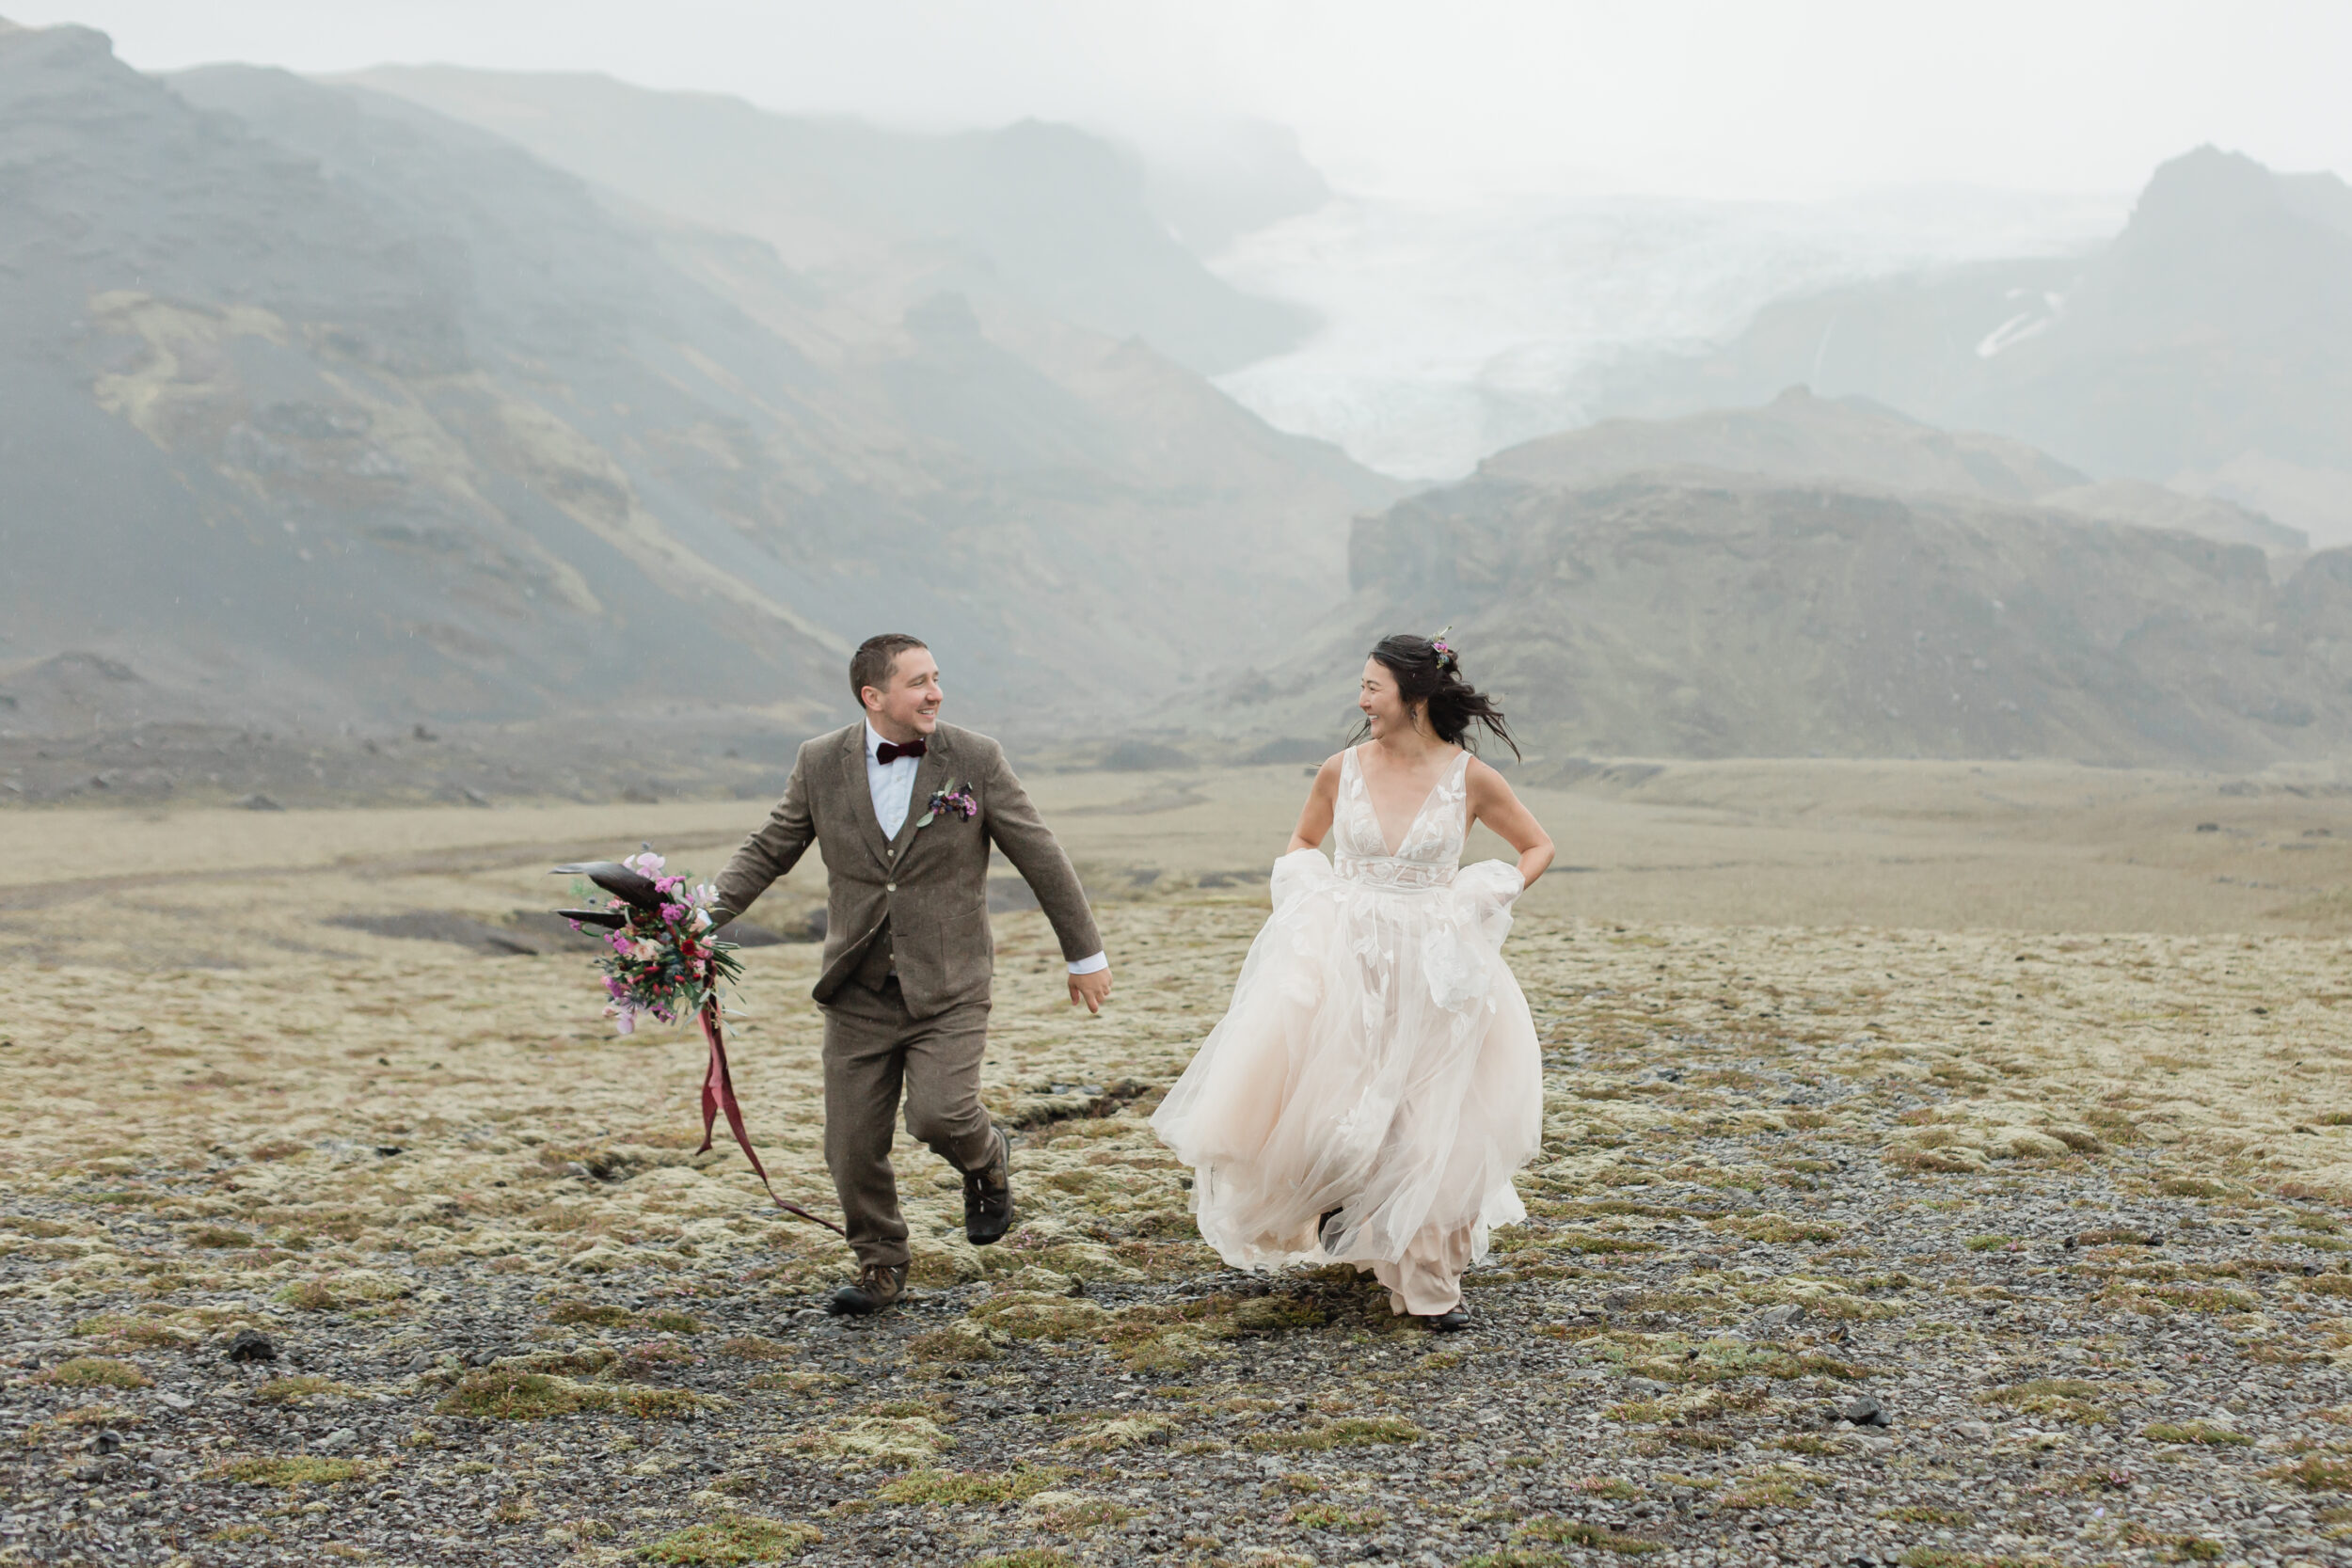 A couple runs through a field in Iceland